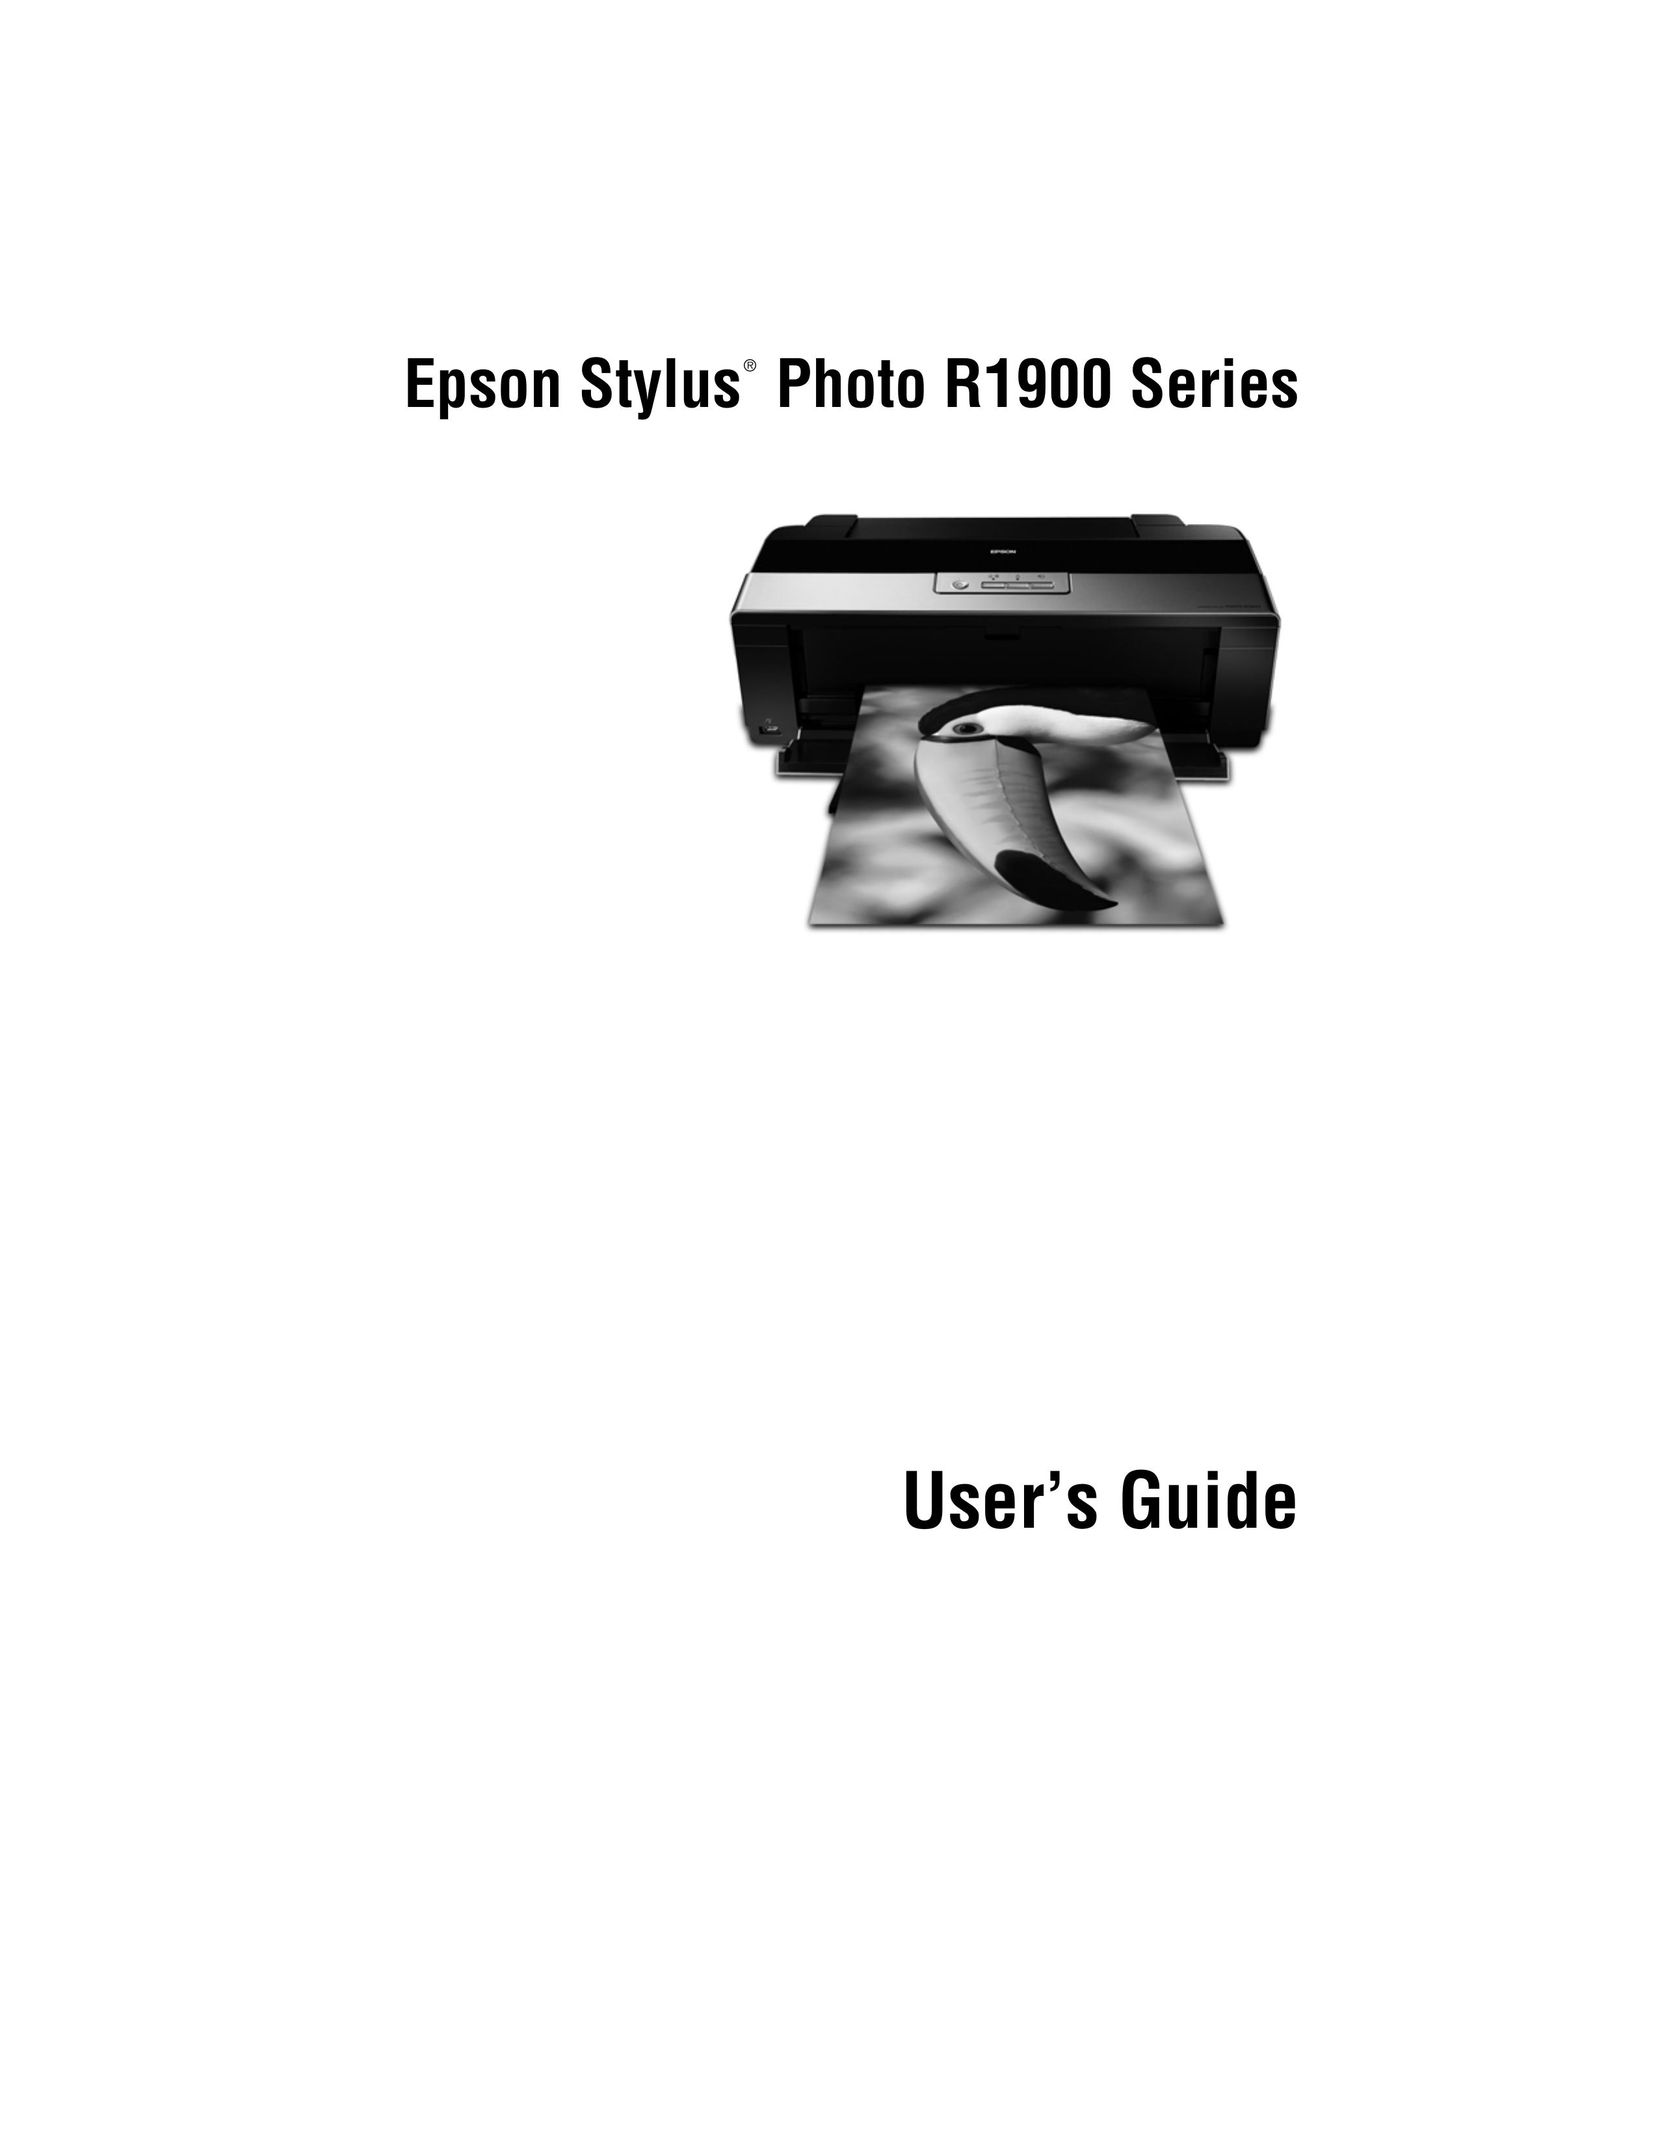 Ericsson PHOTO R1900 Printer User Manual